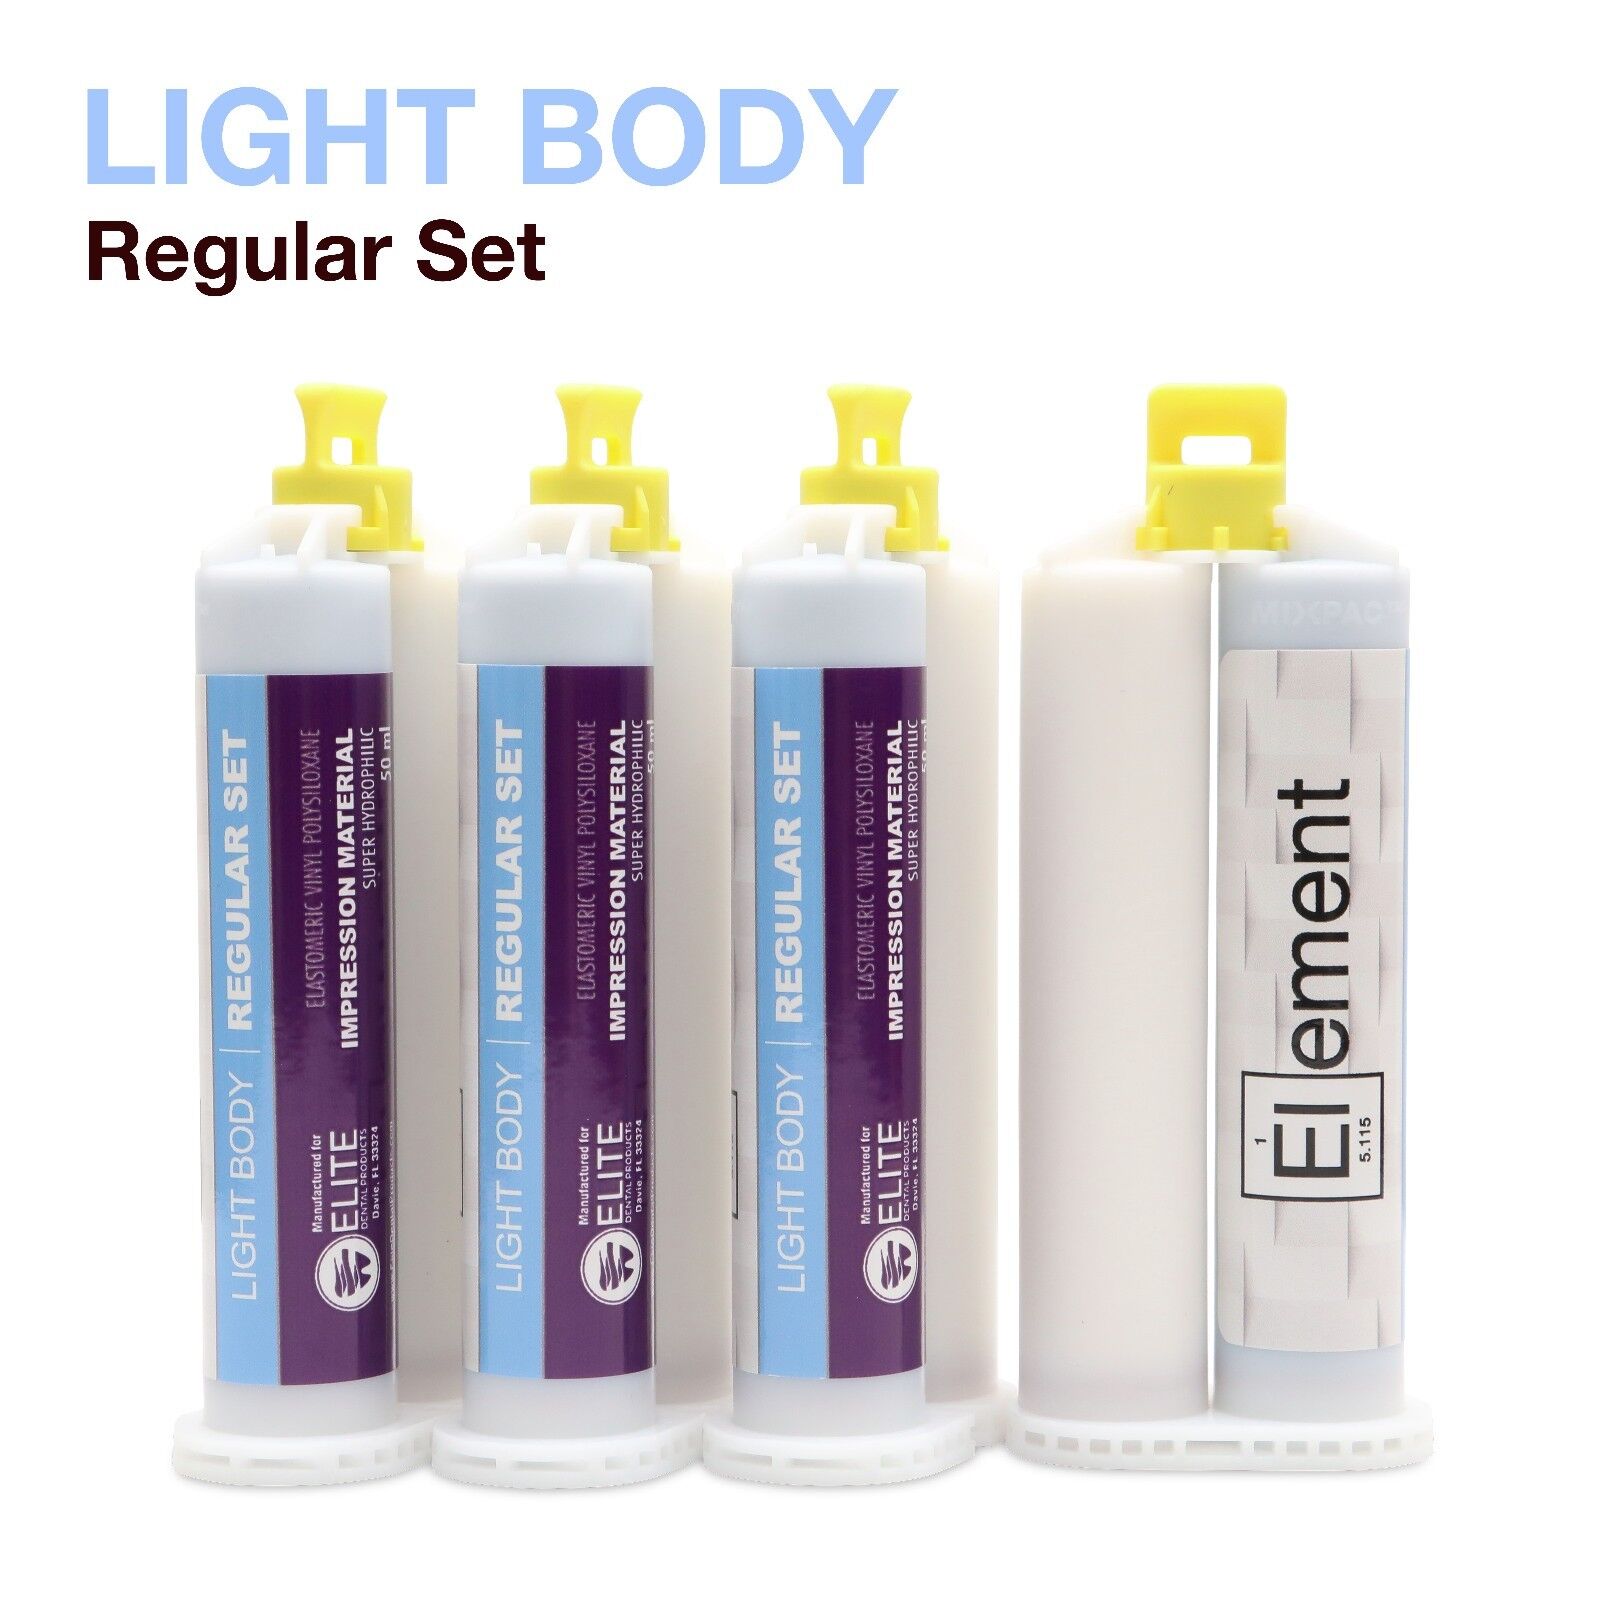 Element LIGHT BODY VPS PVS Dental Impression Material REGULAR Set 50ML Cartridge